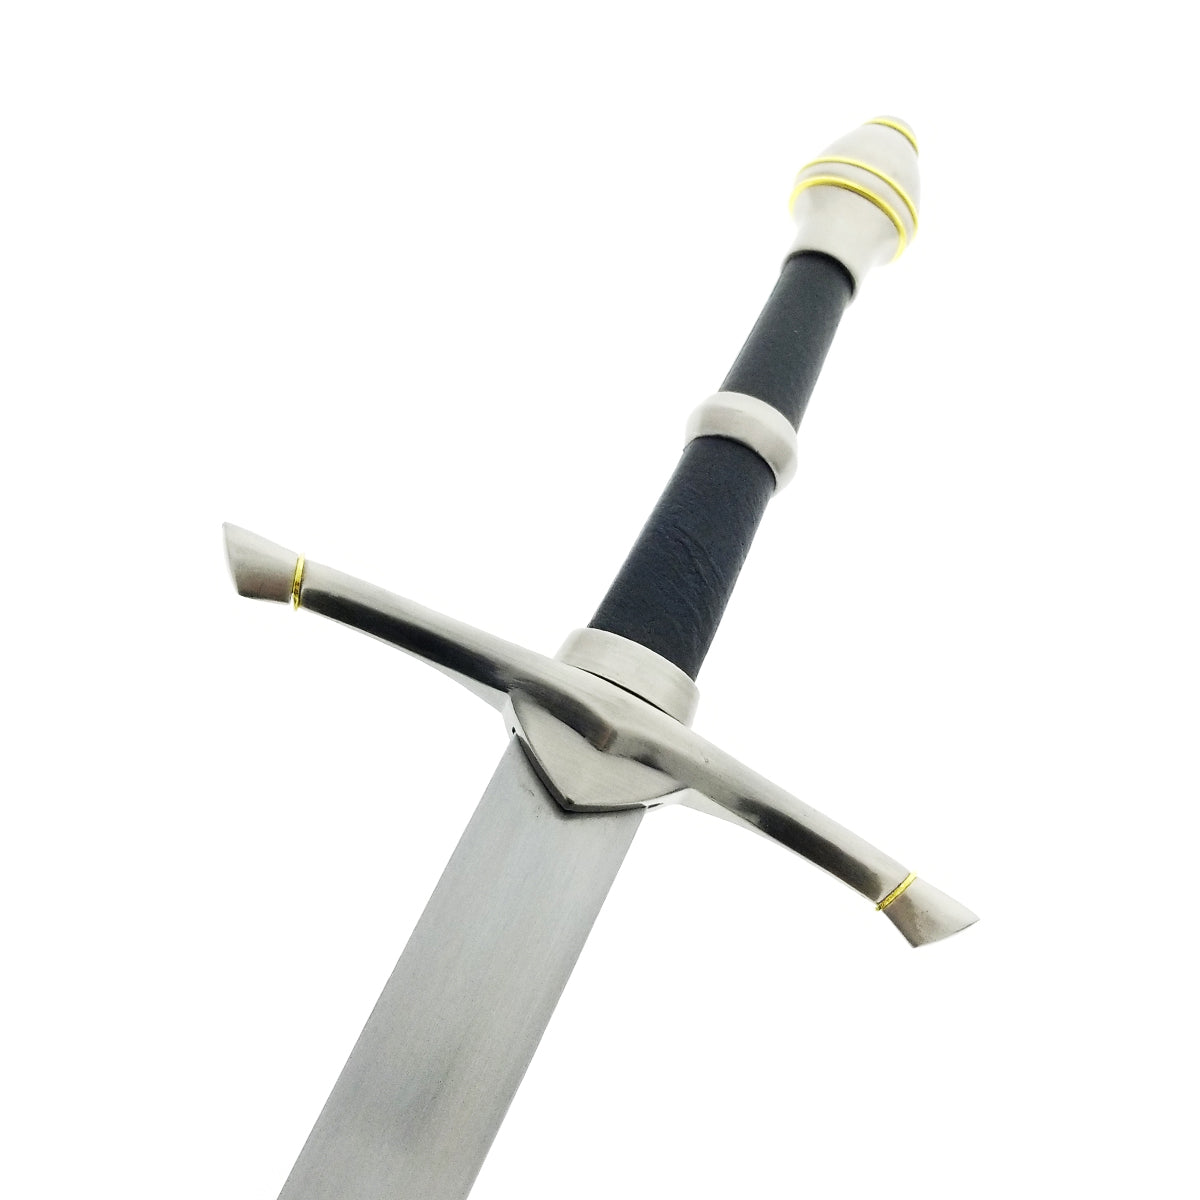 41 1/4" Knight's One Hand Sword